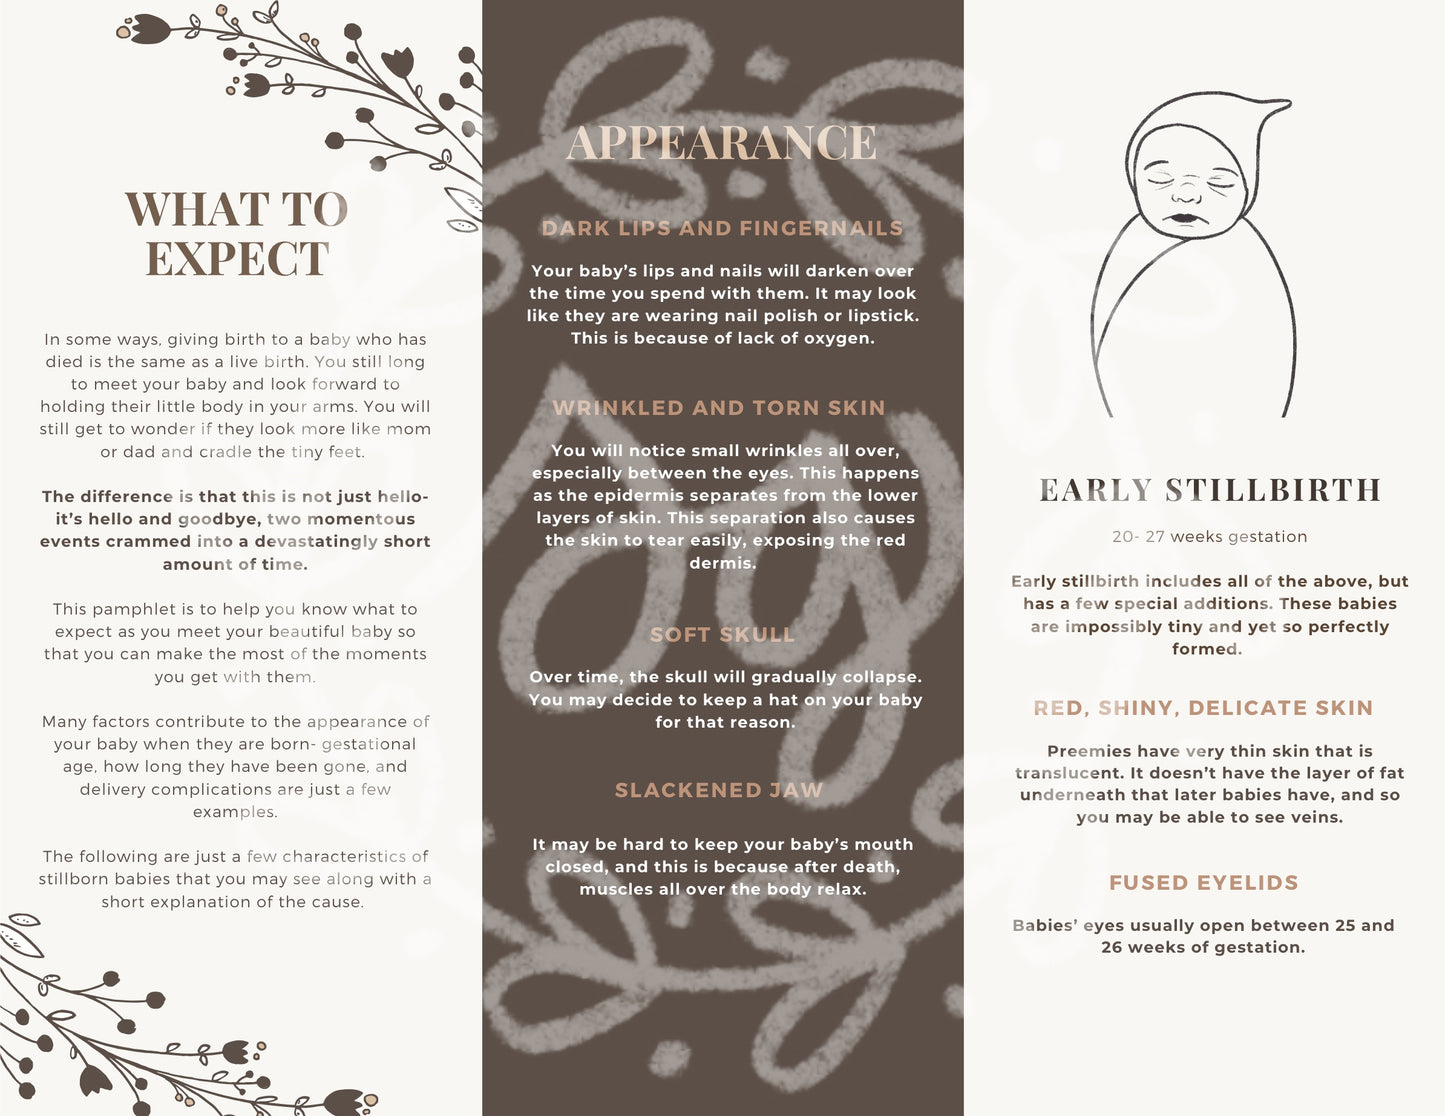 “Meeting Your Stillborn Baby” Hospital Brochure Pack of 10